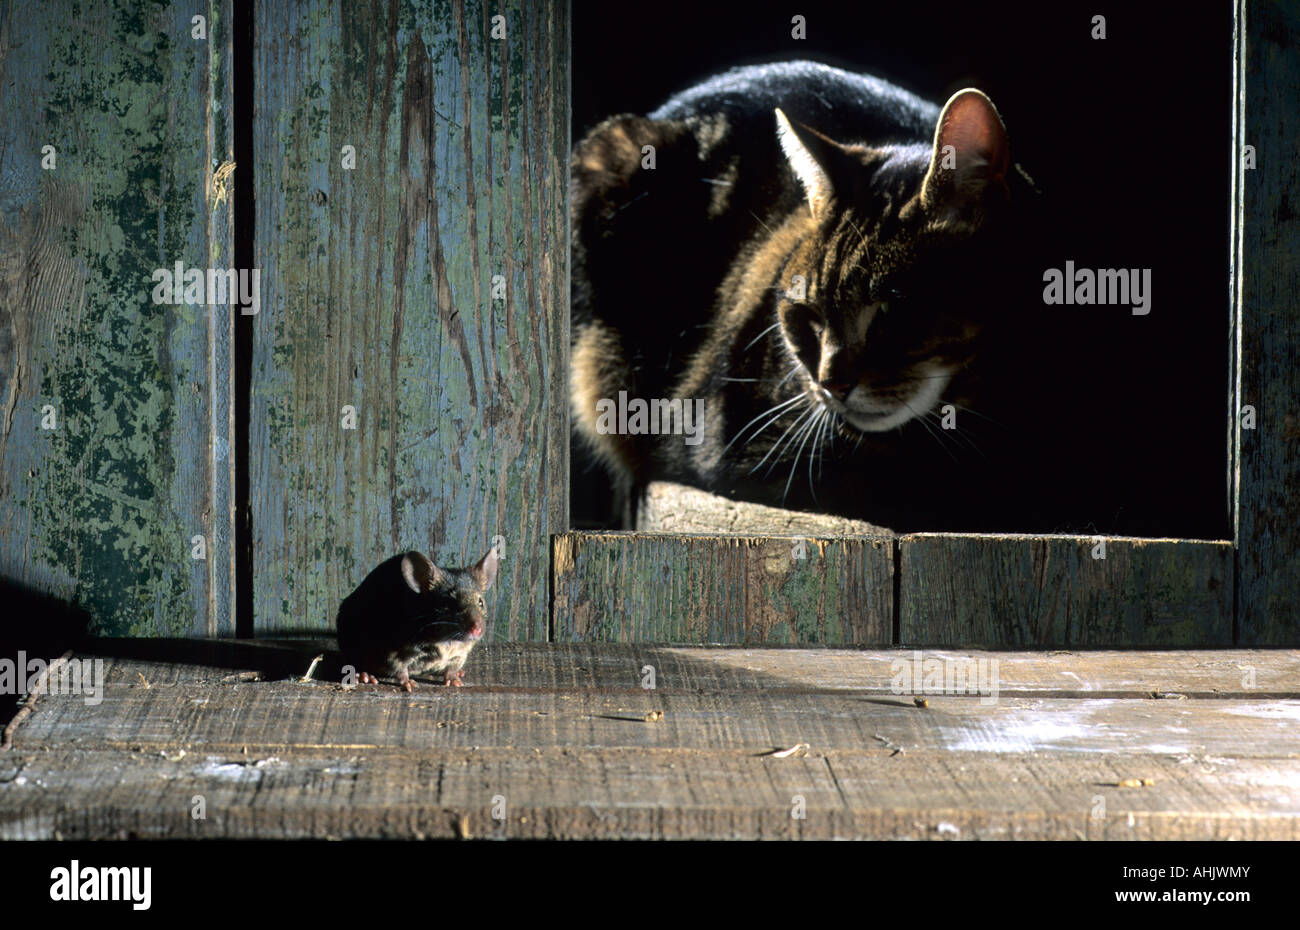 Katze lauernd vorne Maus cat lurking mouse in front Stock Photo